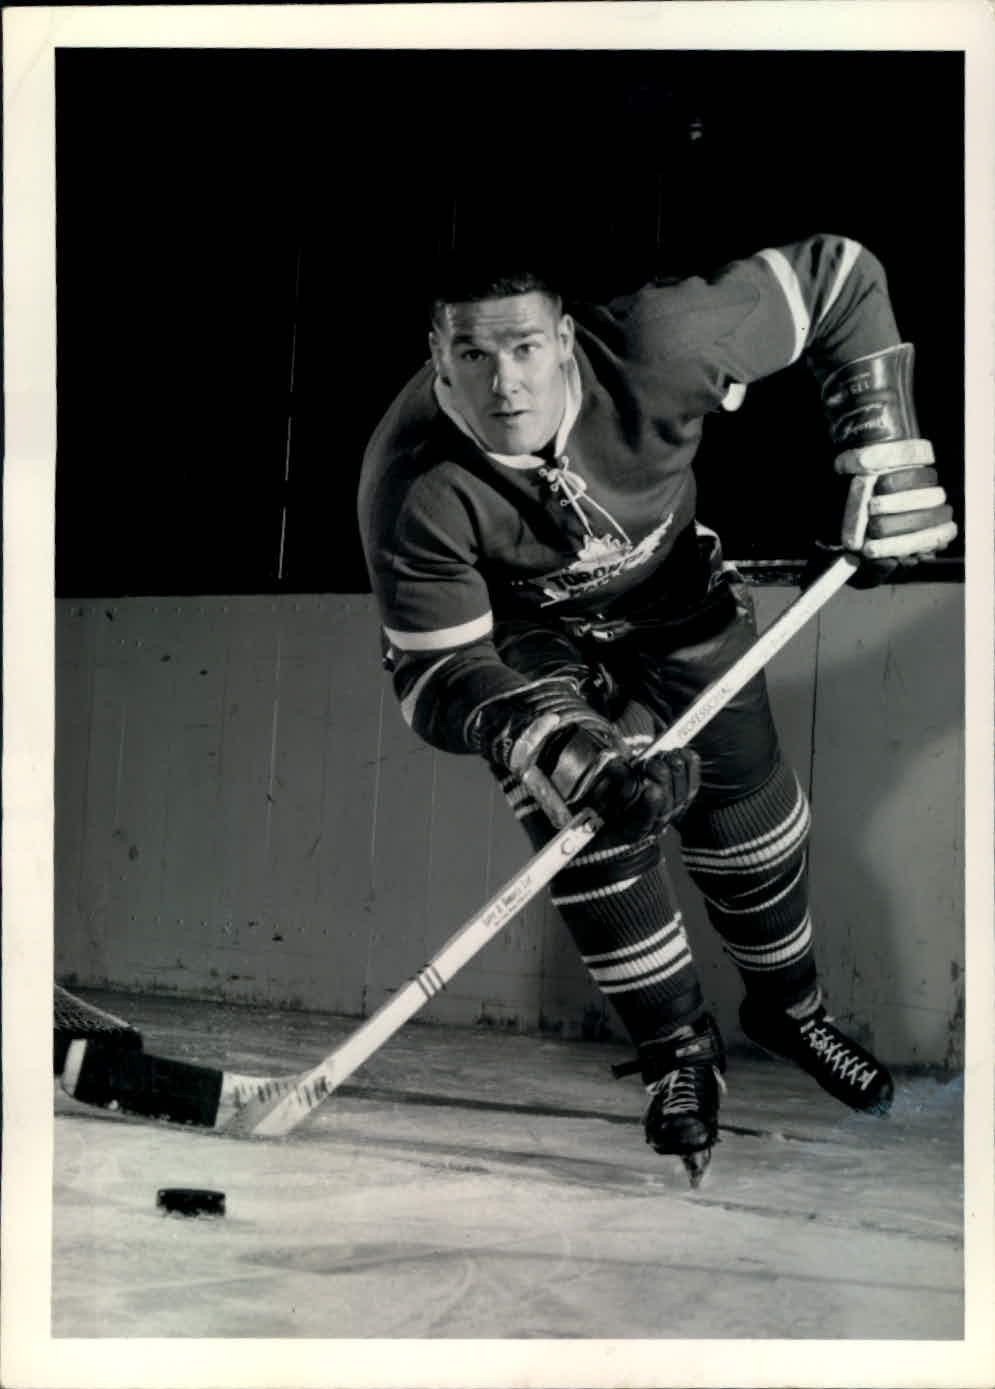 CCM  TIM HORTON Toronto Maple Leafs 1967 Vintage NHL Hockey Jersey